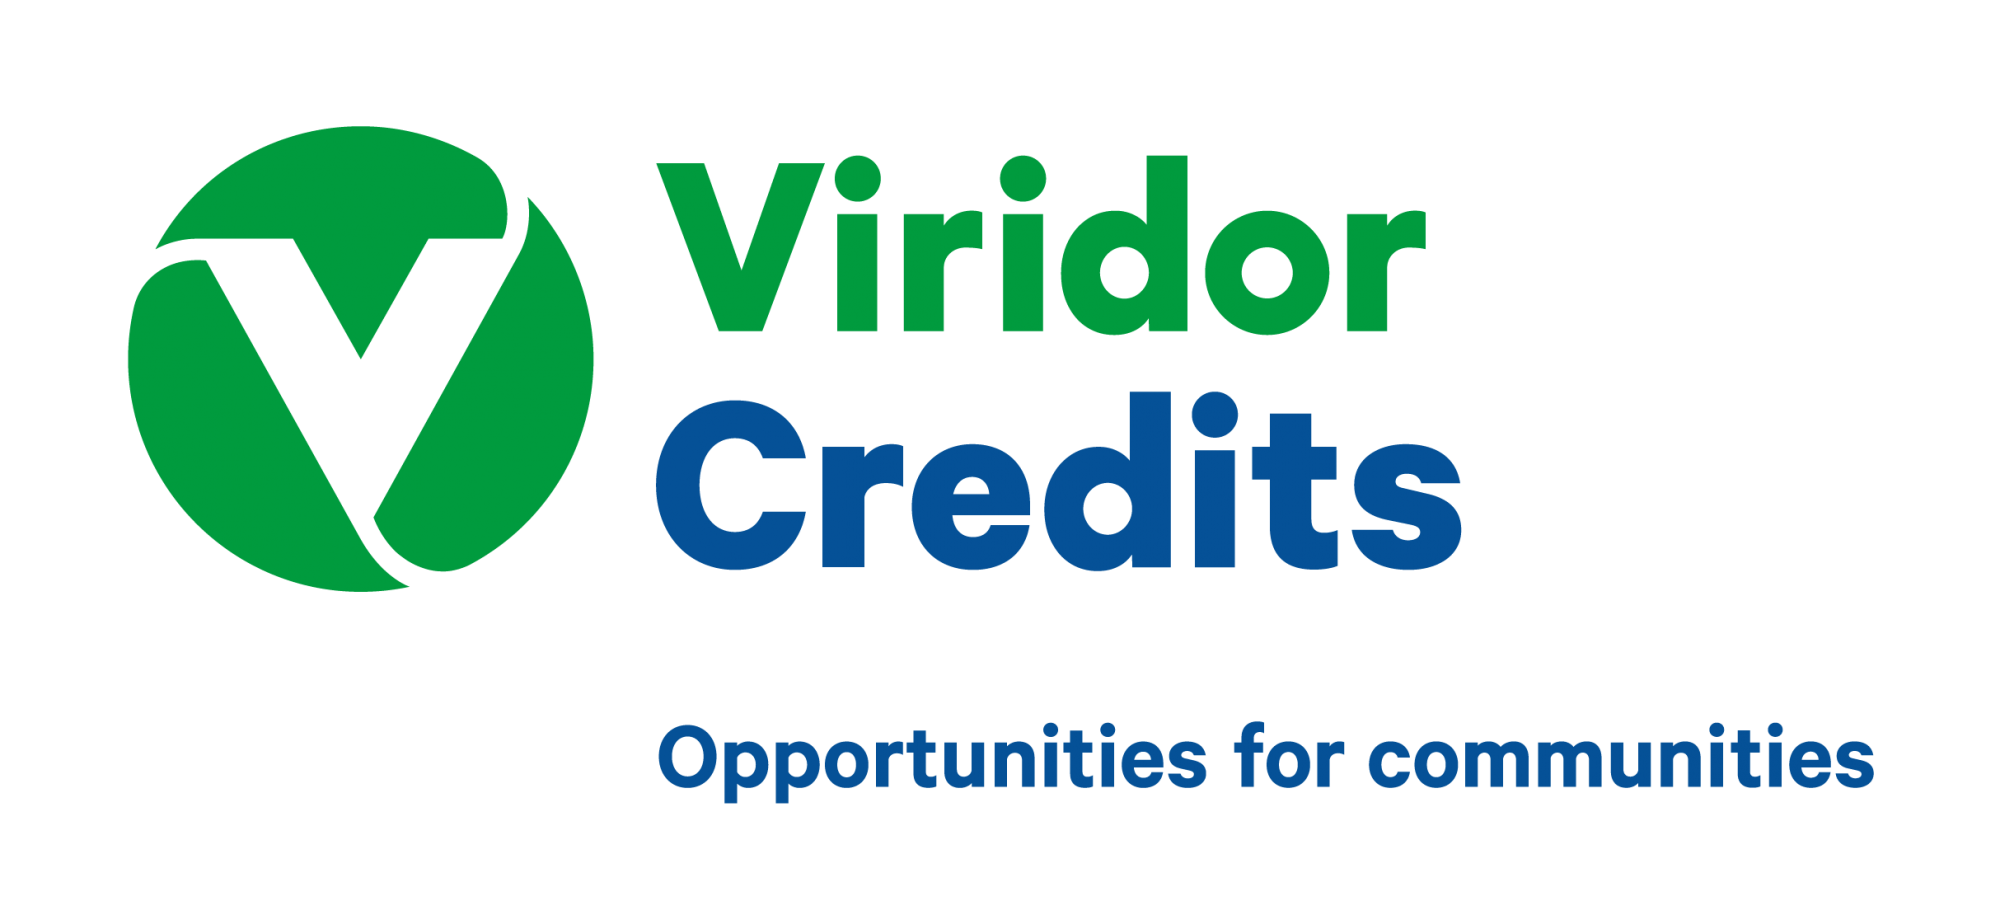 Viridor Credits